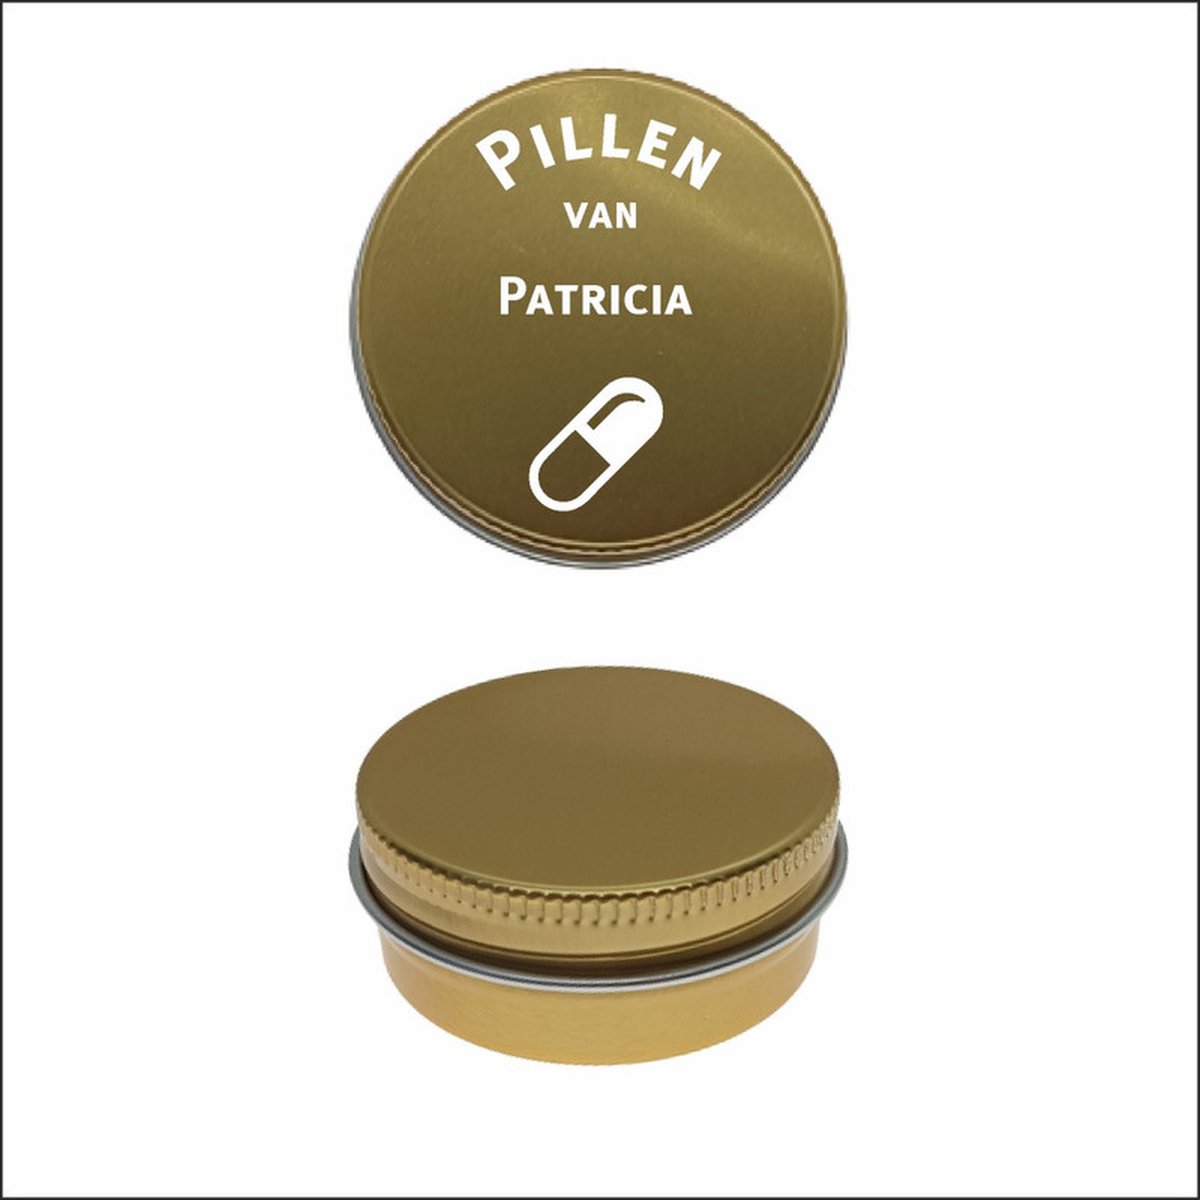 Pillen Blikje Met Naam Gravering - Patricia